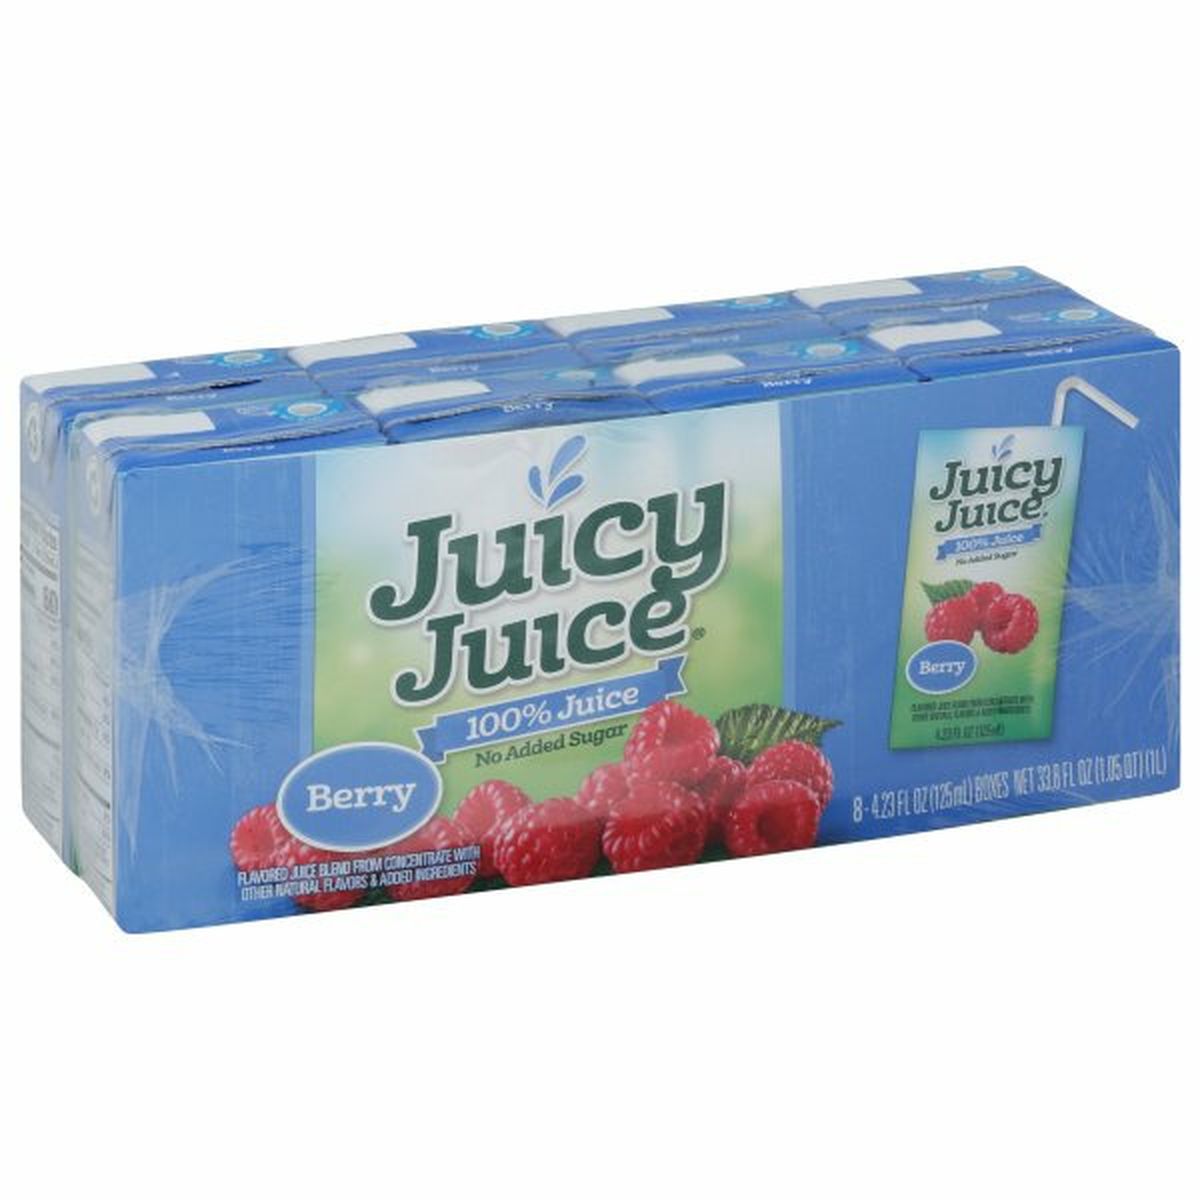 Calories in Juicy Juice 100% Juice, No Added Sugar, Berry